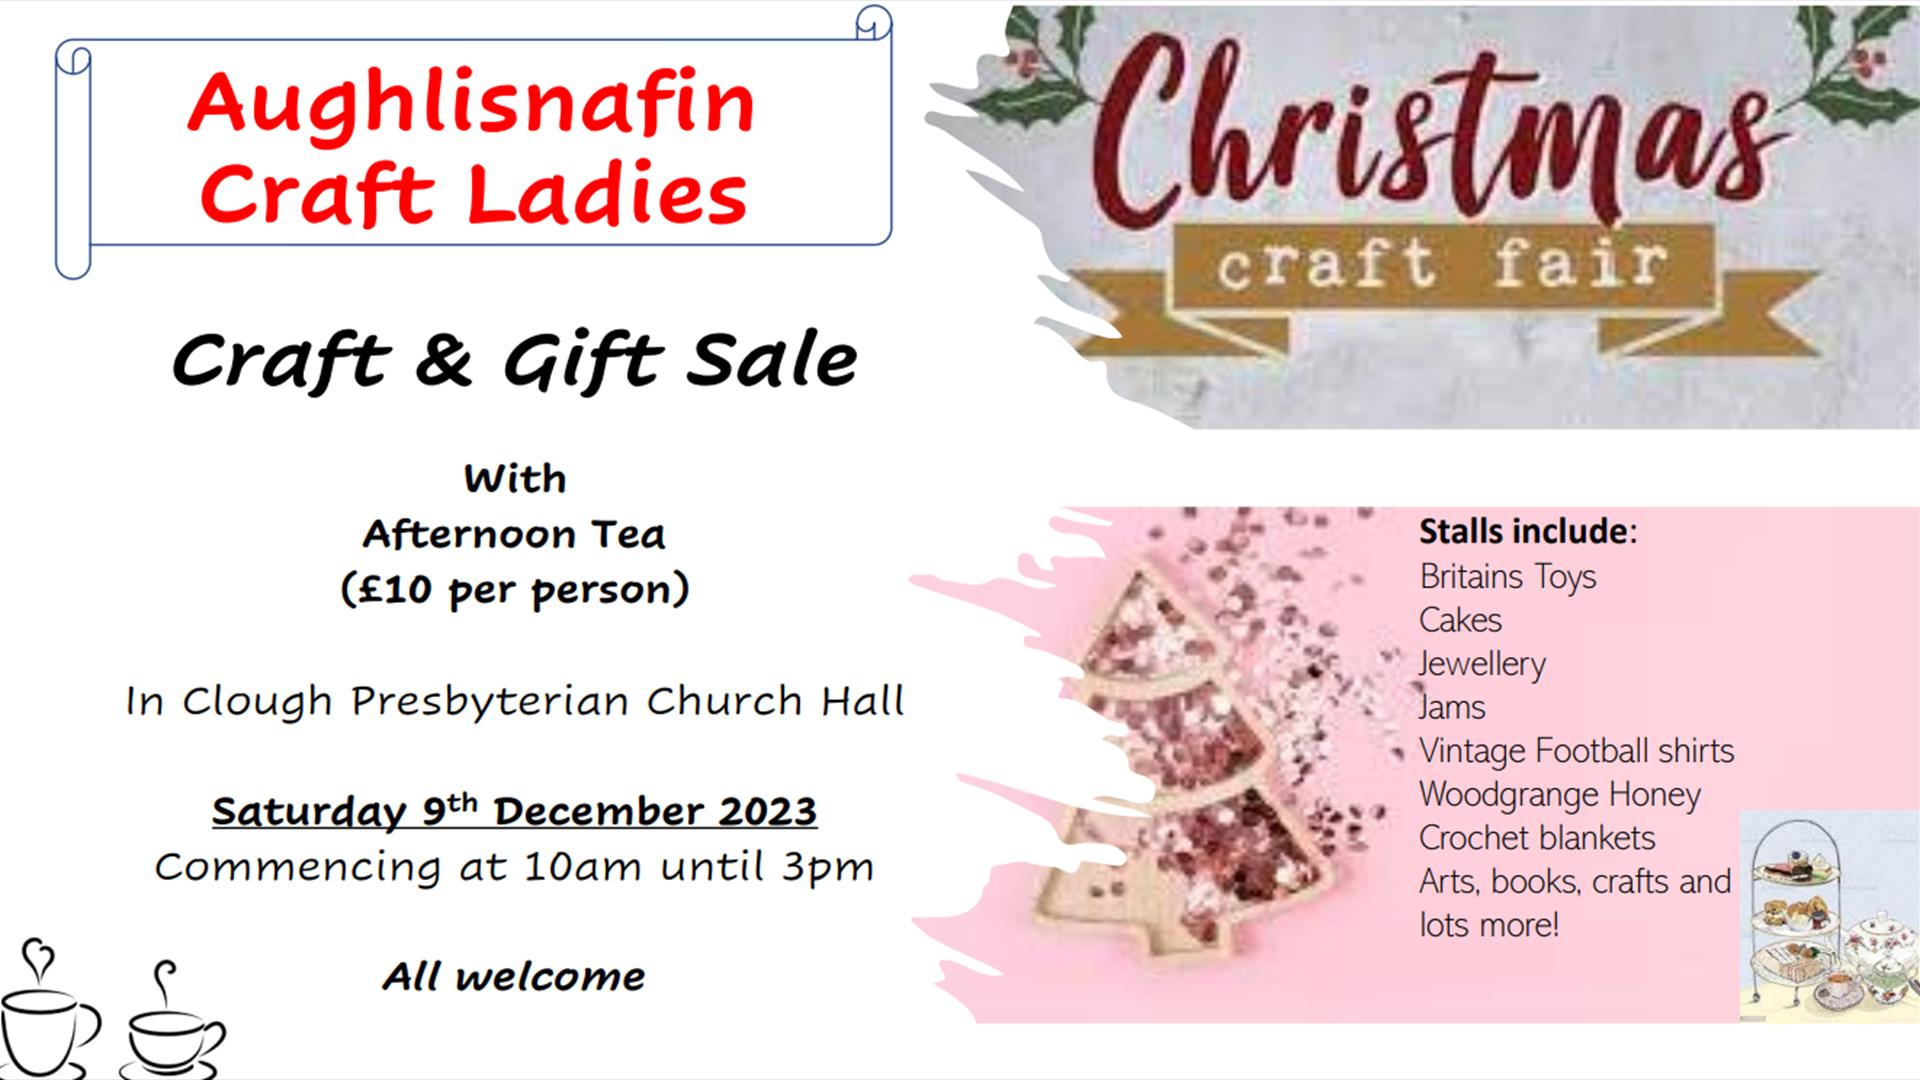 Flyer advertising Christmas Craft Fair, Aughlisnafin County Down